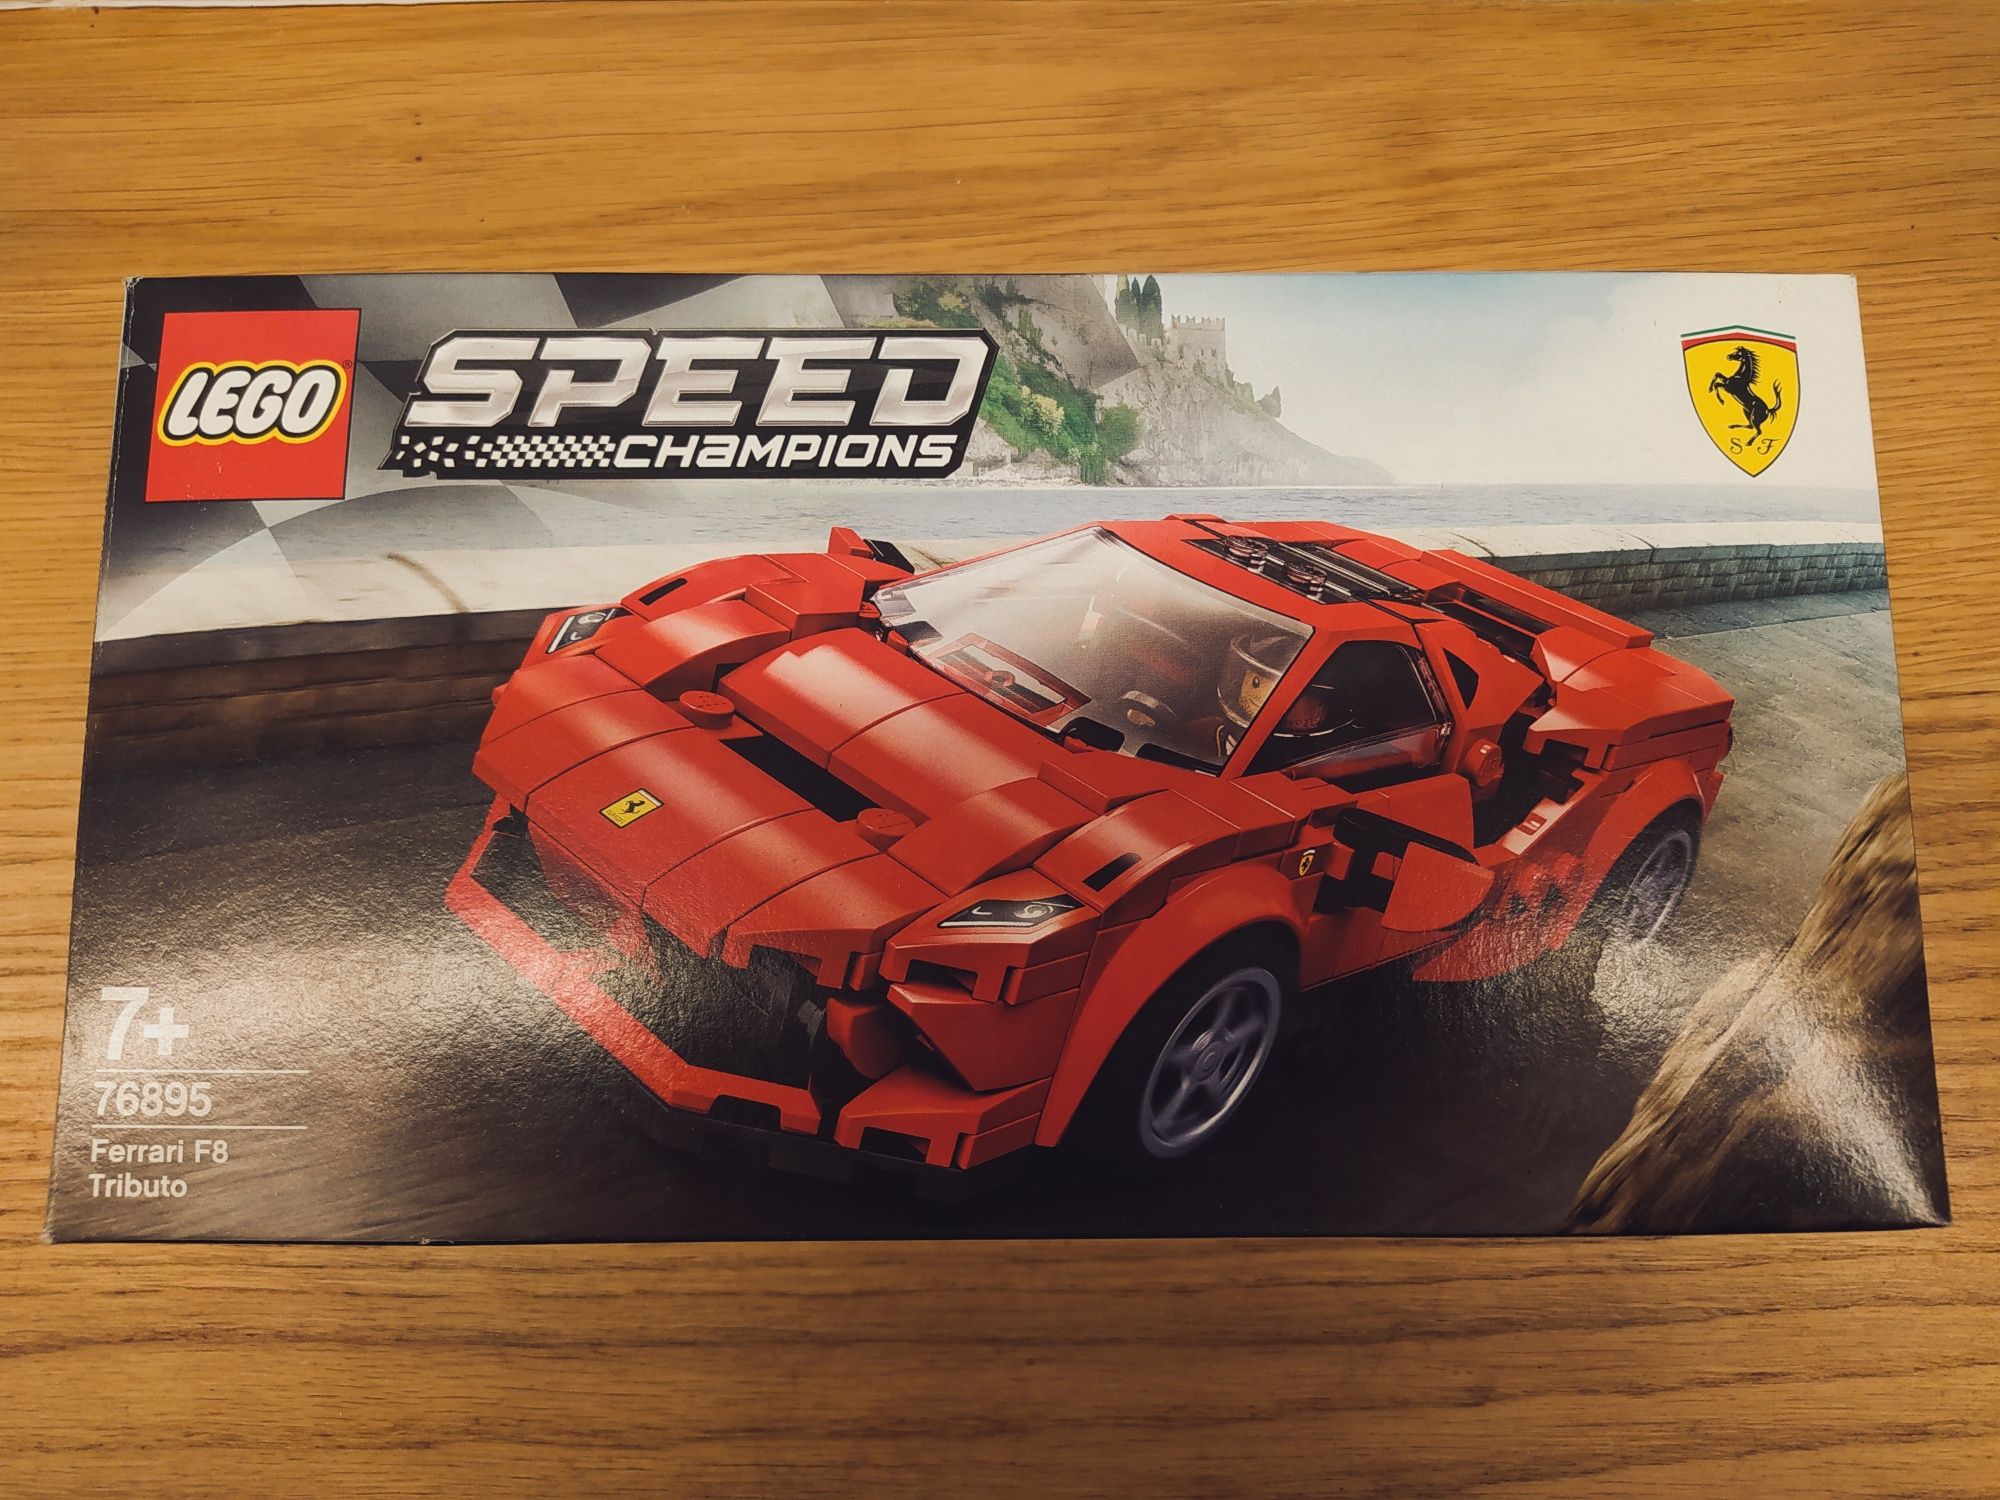 LEGO 76895 Ferrari F8 Tributo, 2020 rok, jak nowe